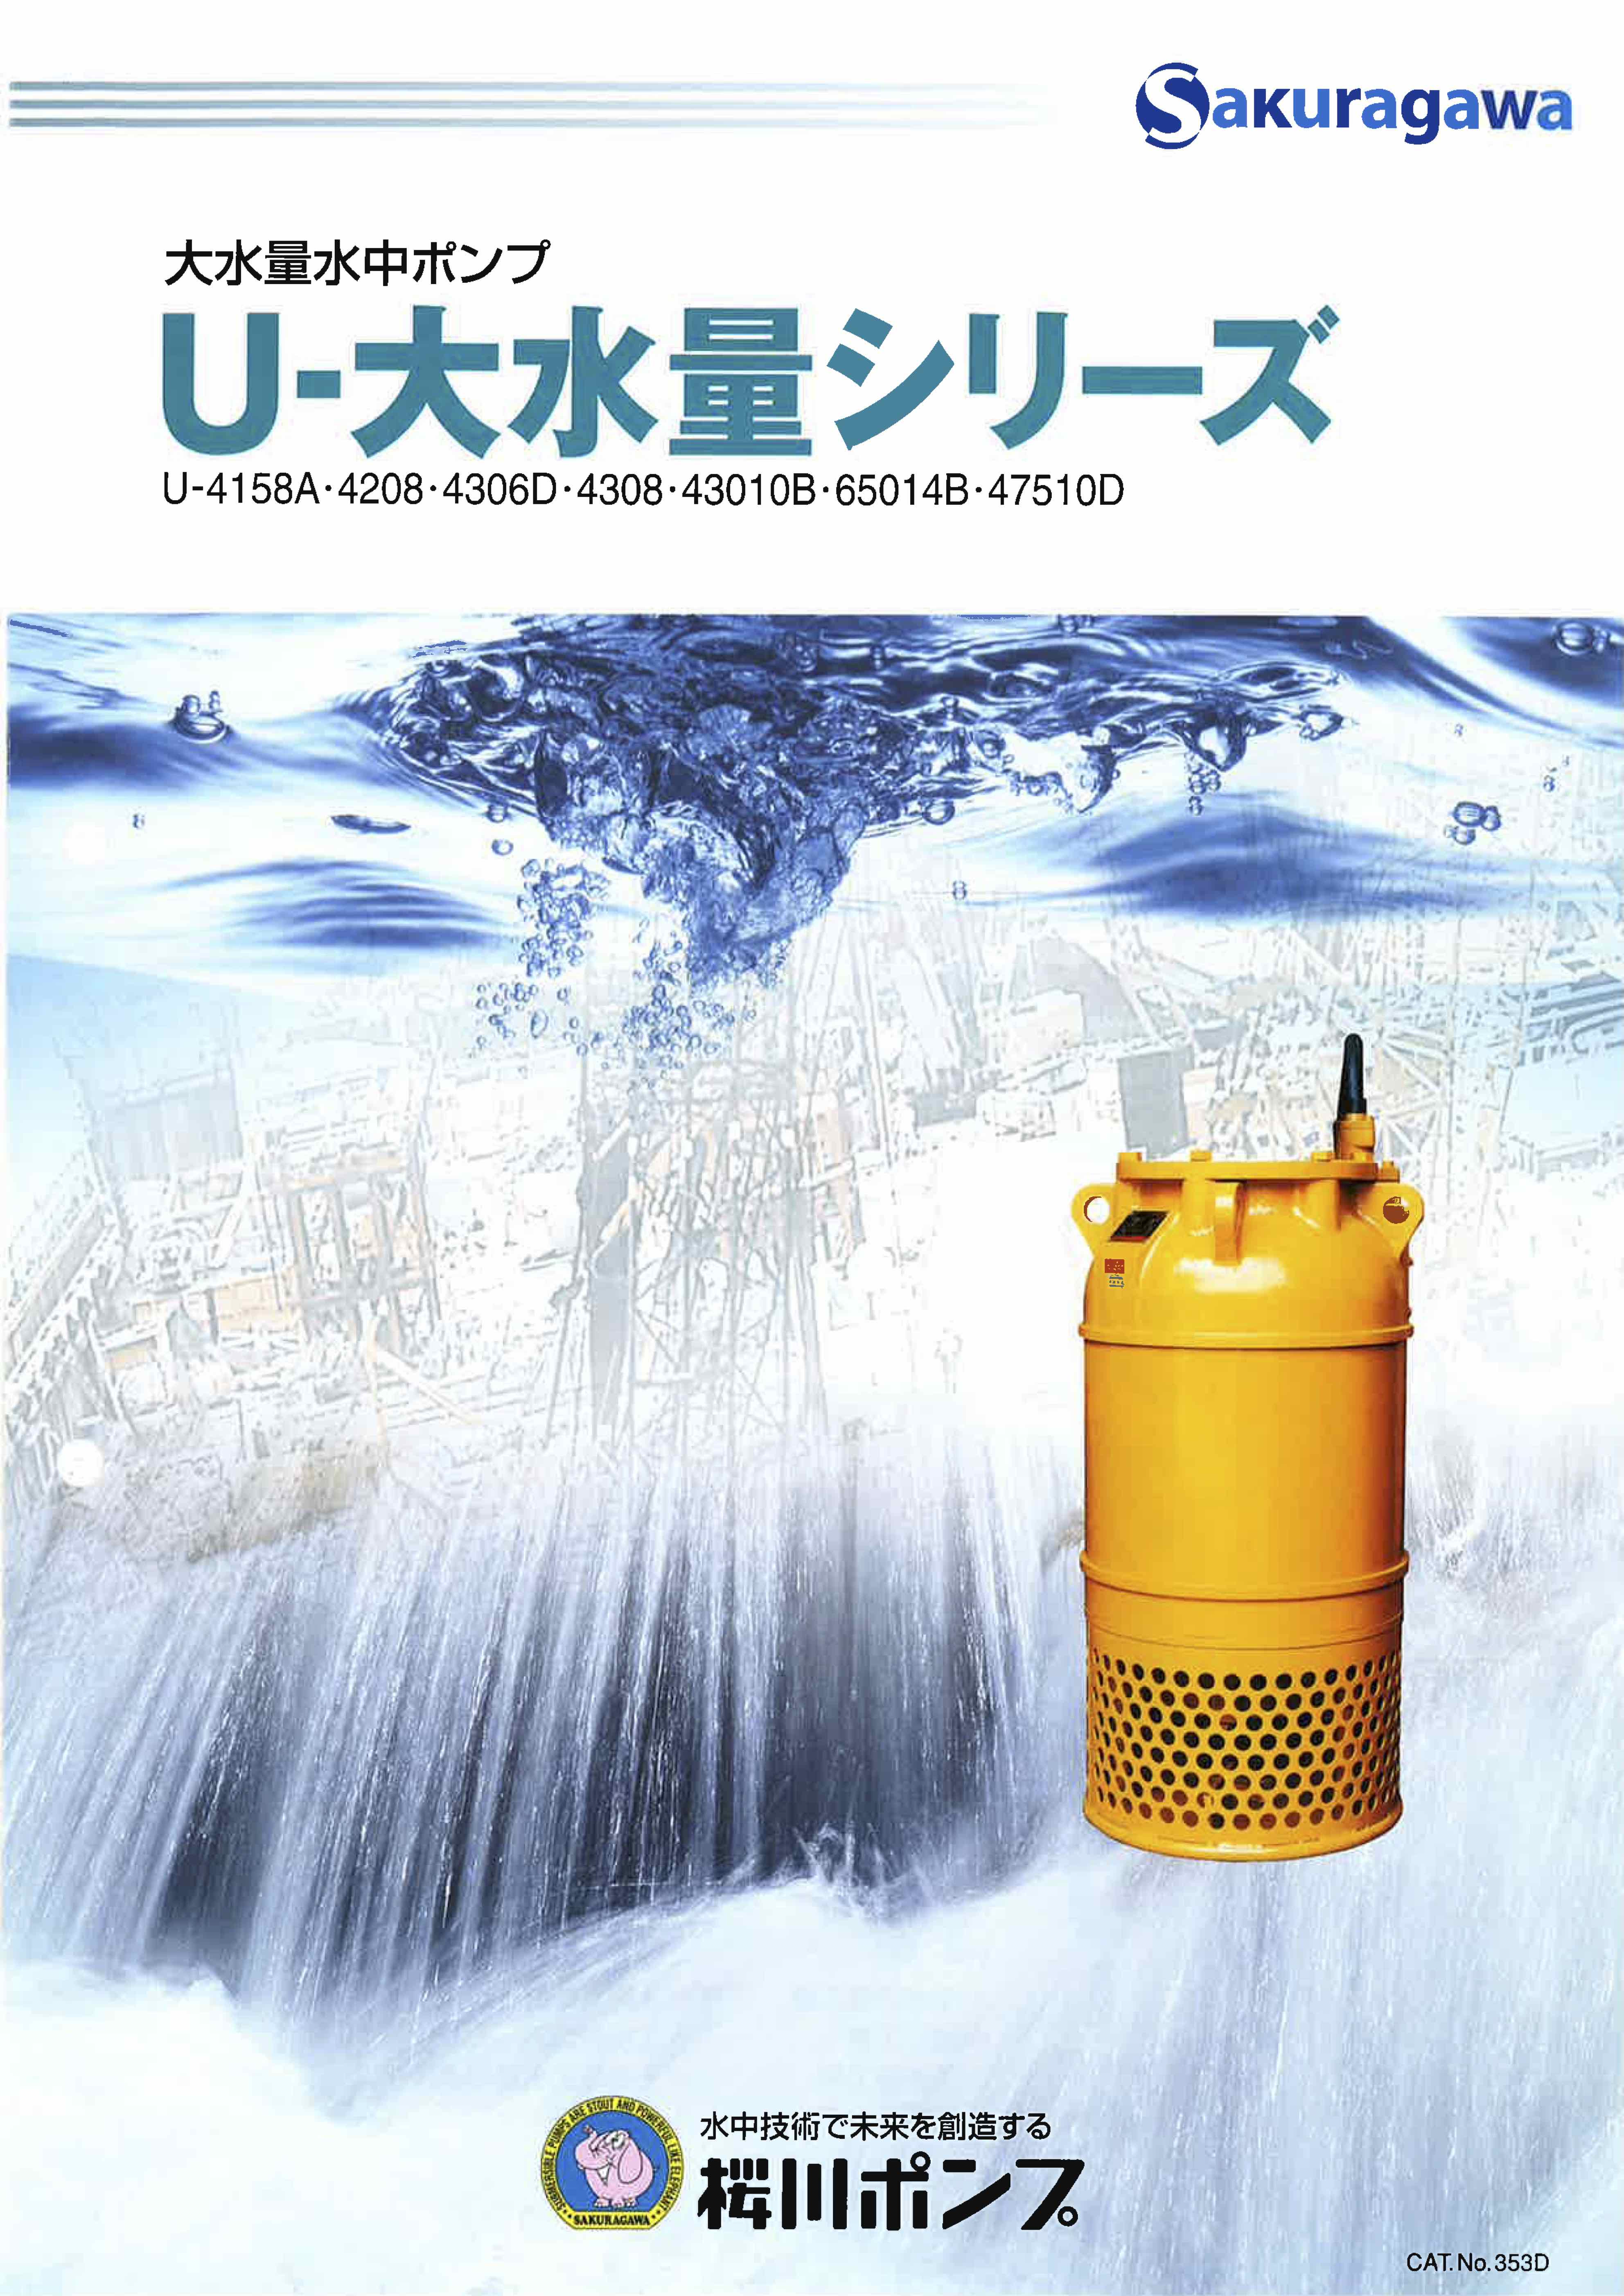 U大水量シリーズ | 製品情報 | 櫻川ポンプ製作所